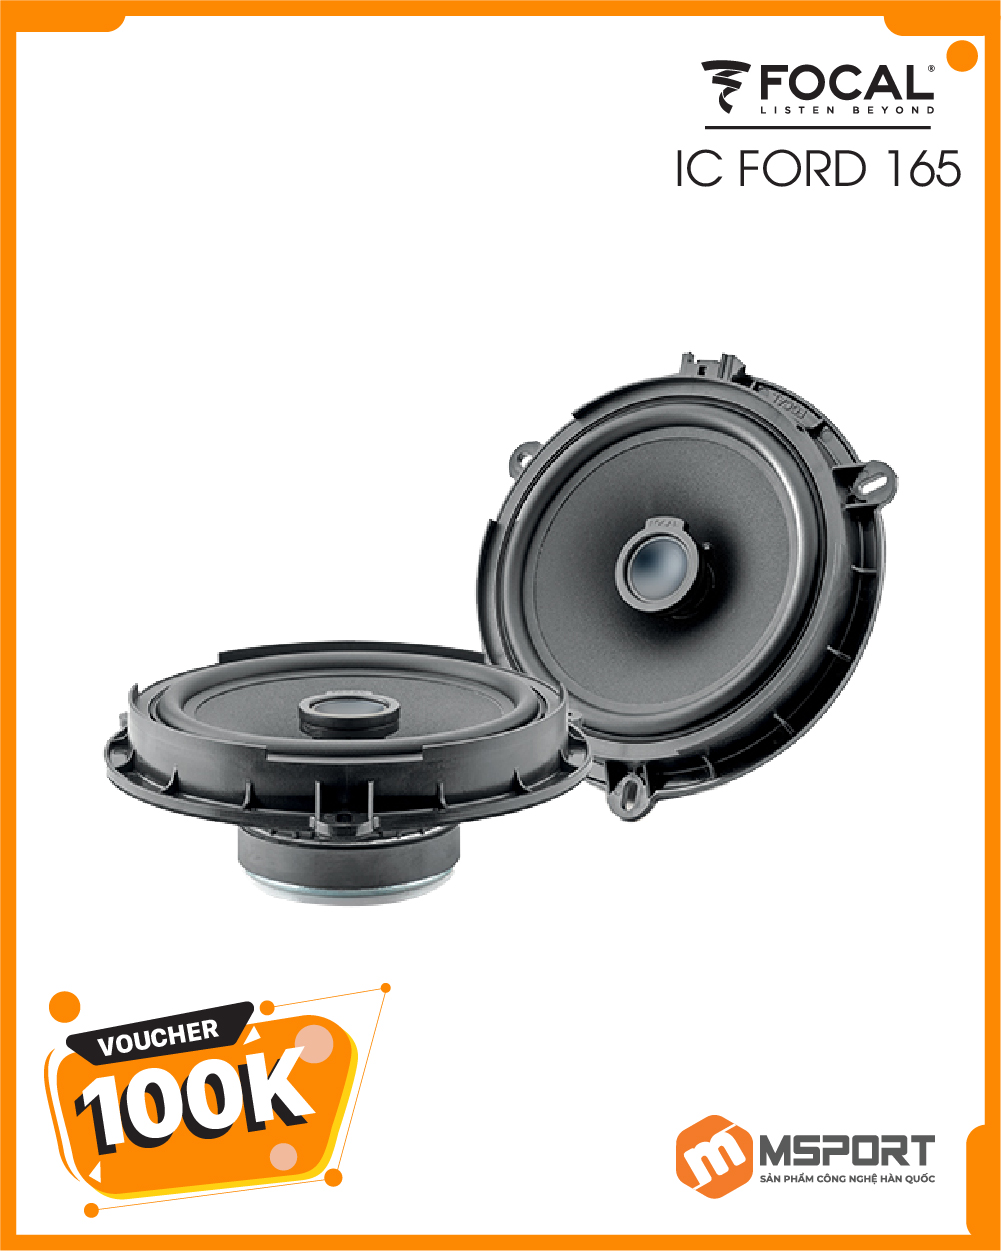 Loa Focal IC FORD 165 - Loa đồng trục 2 chiều cho xe FORD